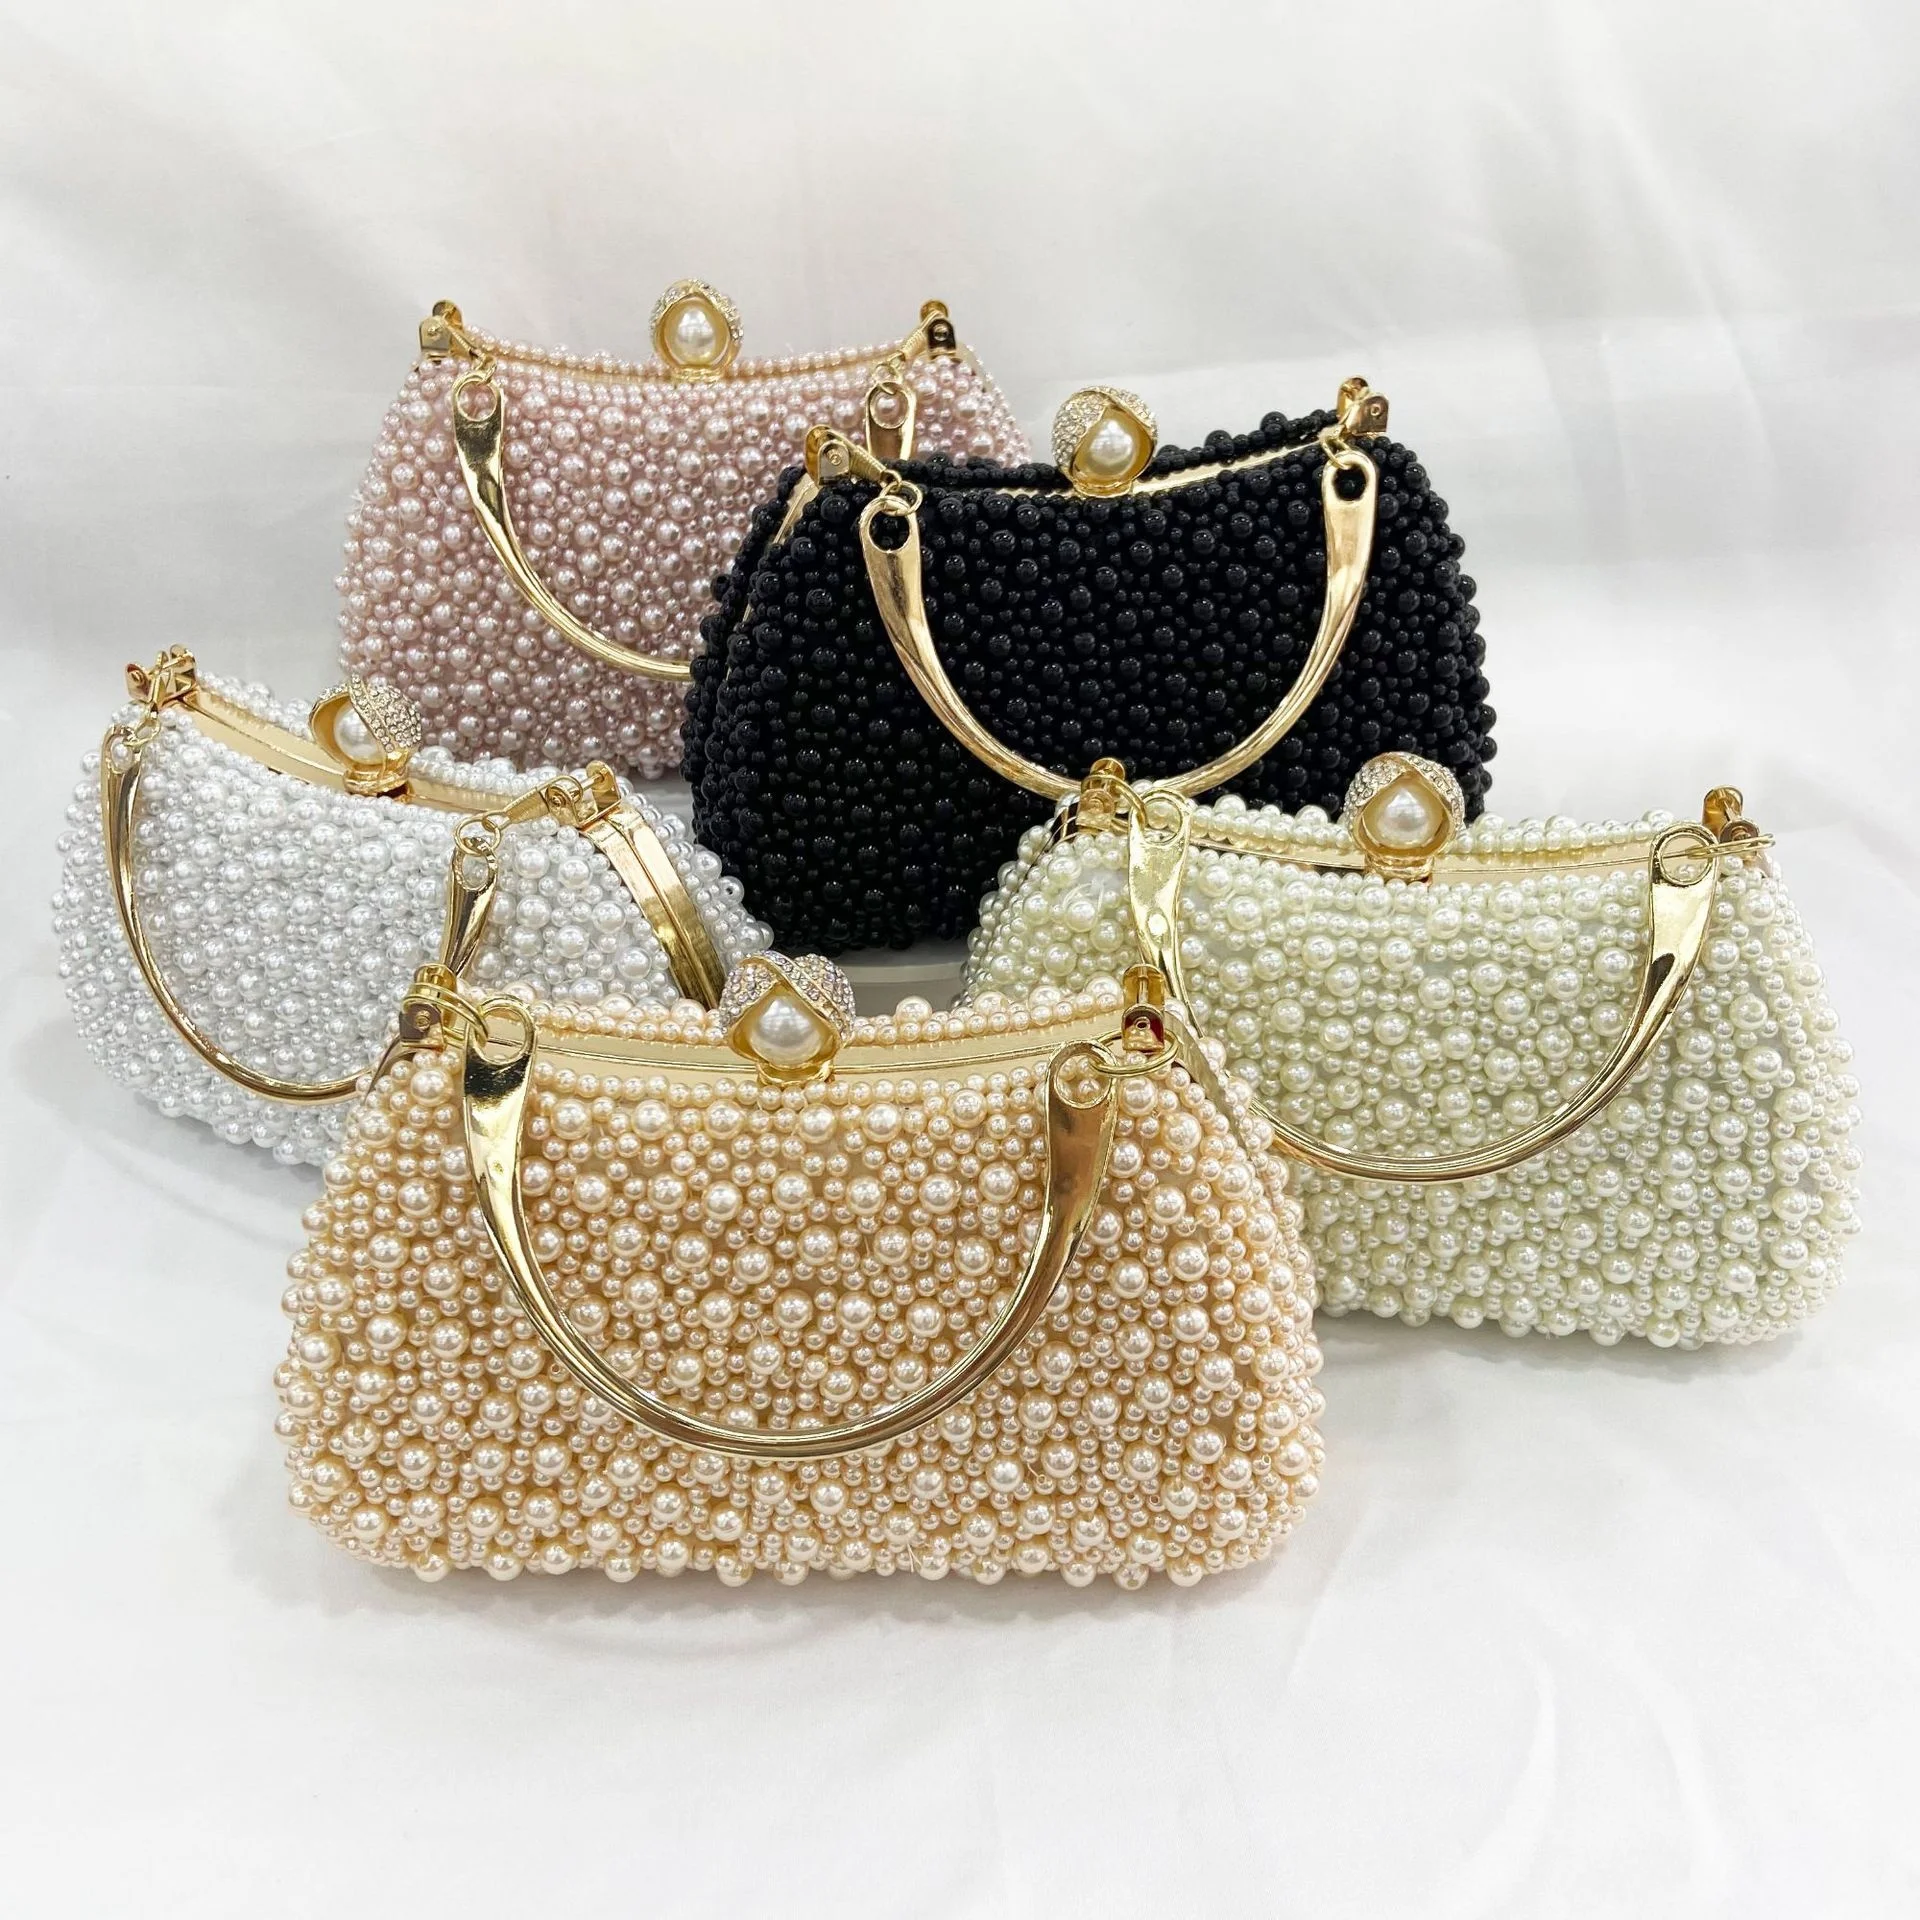 5 Pearl Bridal Handbags For Any Wedding Occasion